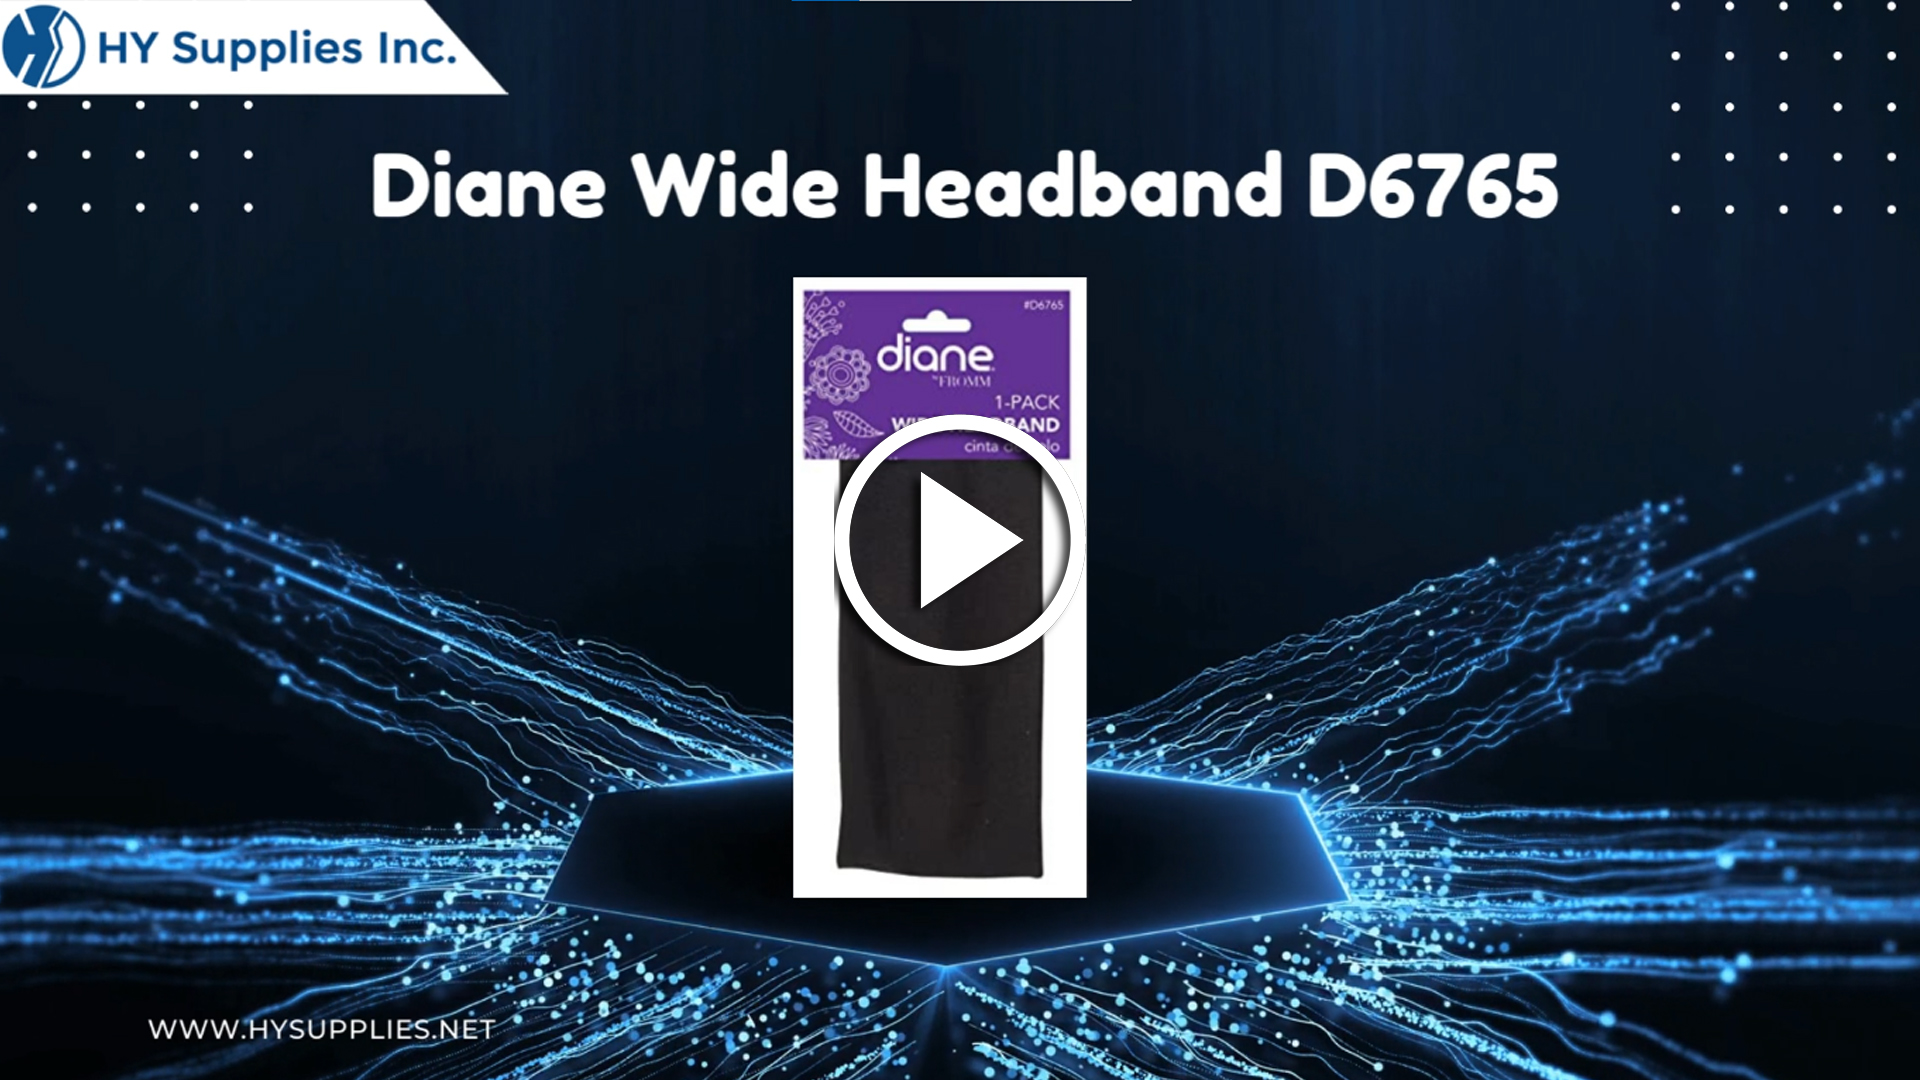 Diane Wide Headband D6765